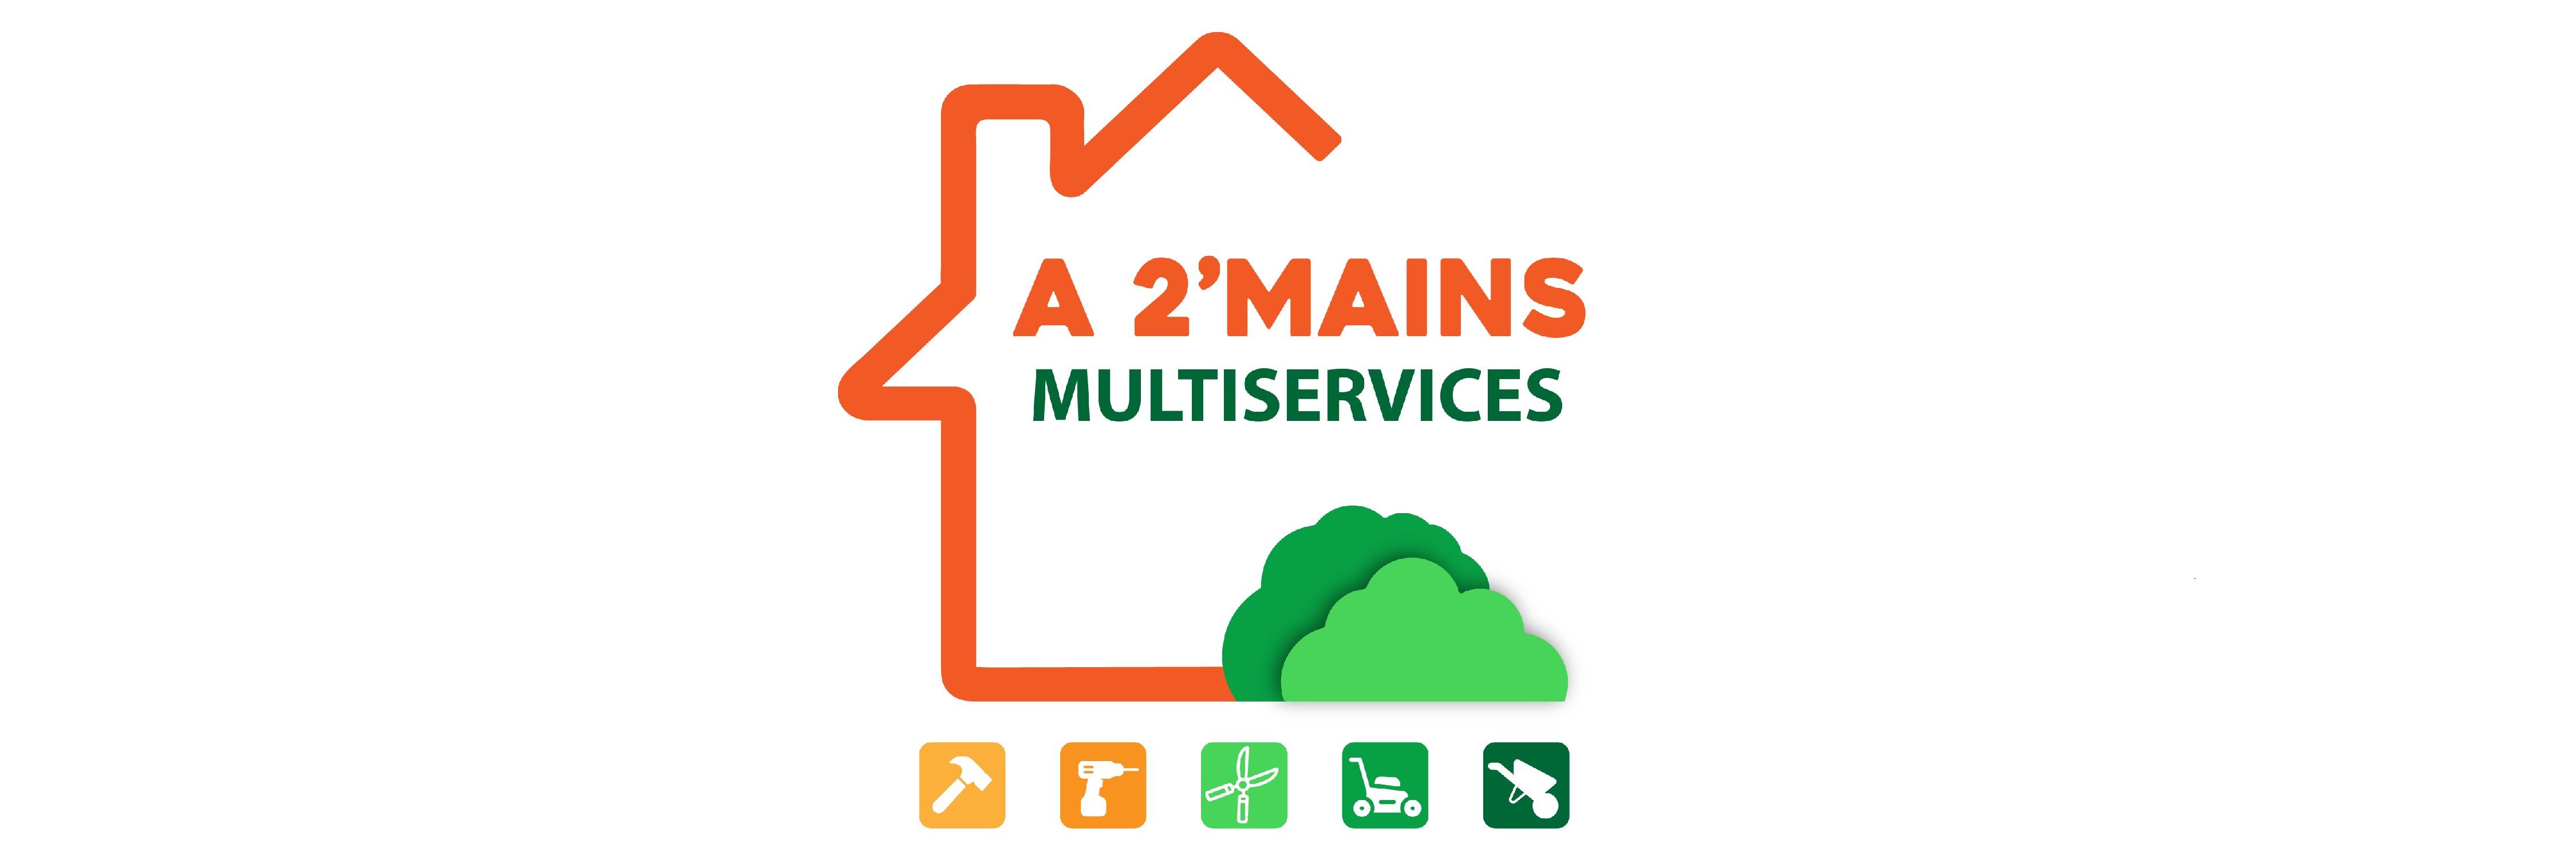 A 2 Mains Multiservices.jpg